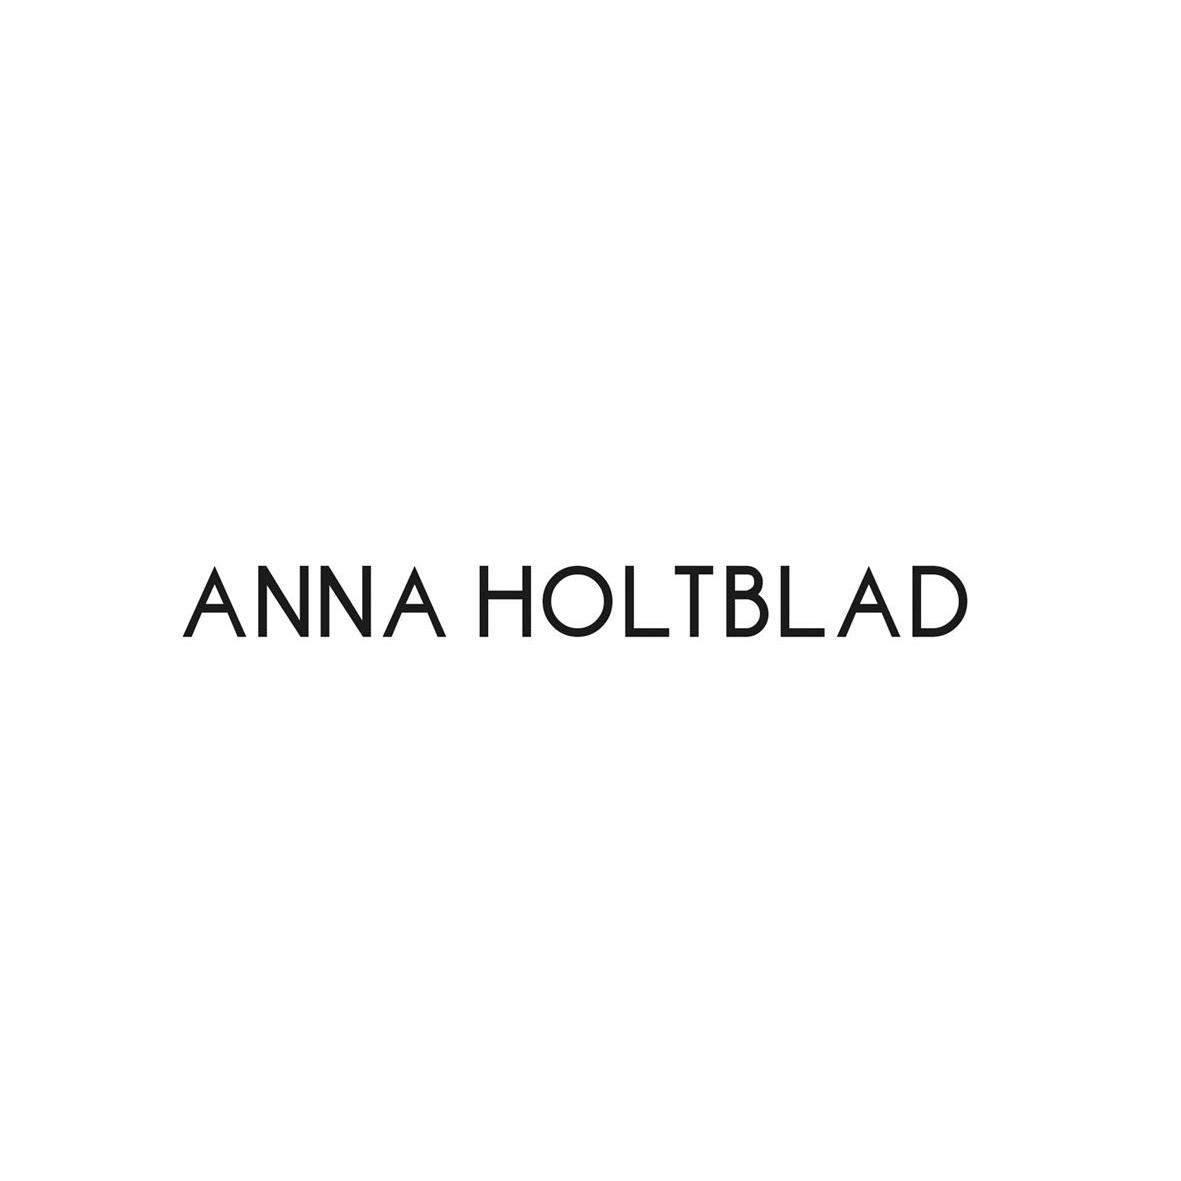 ANNA HOLTBLAD